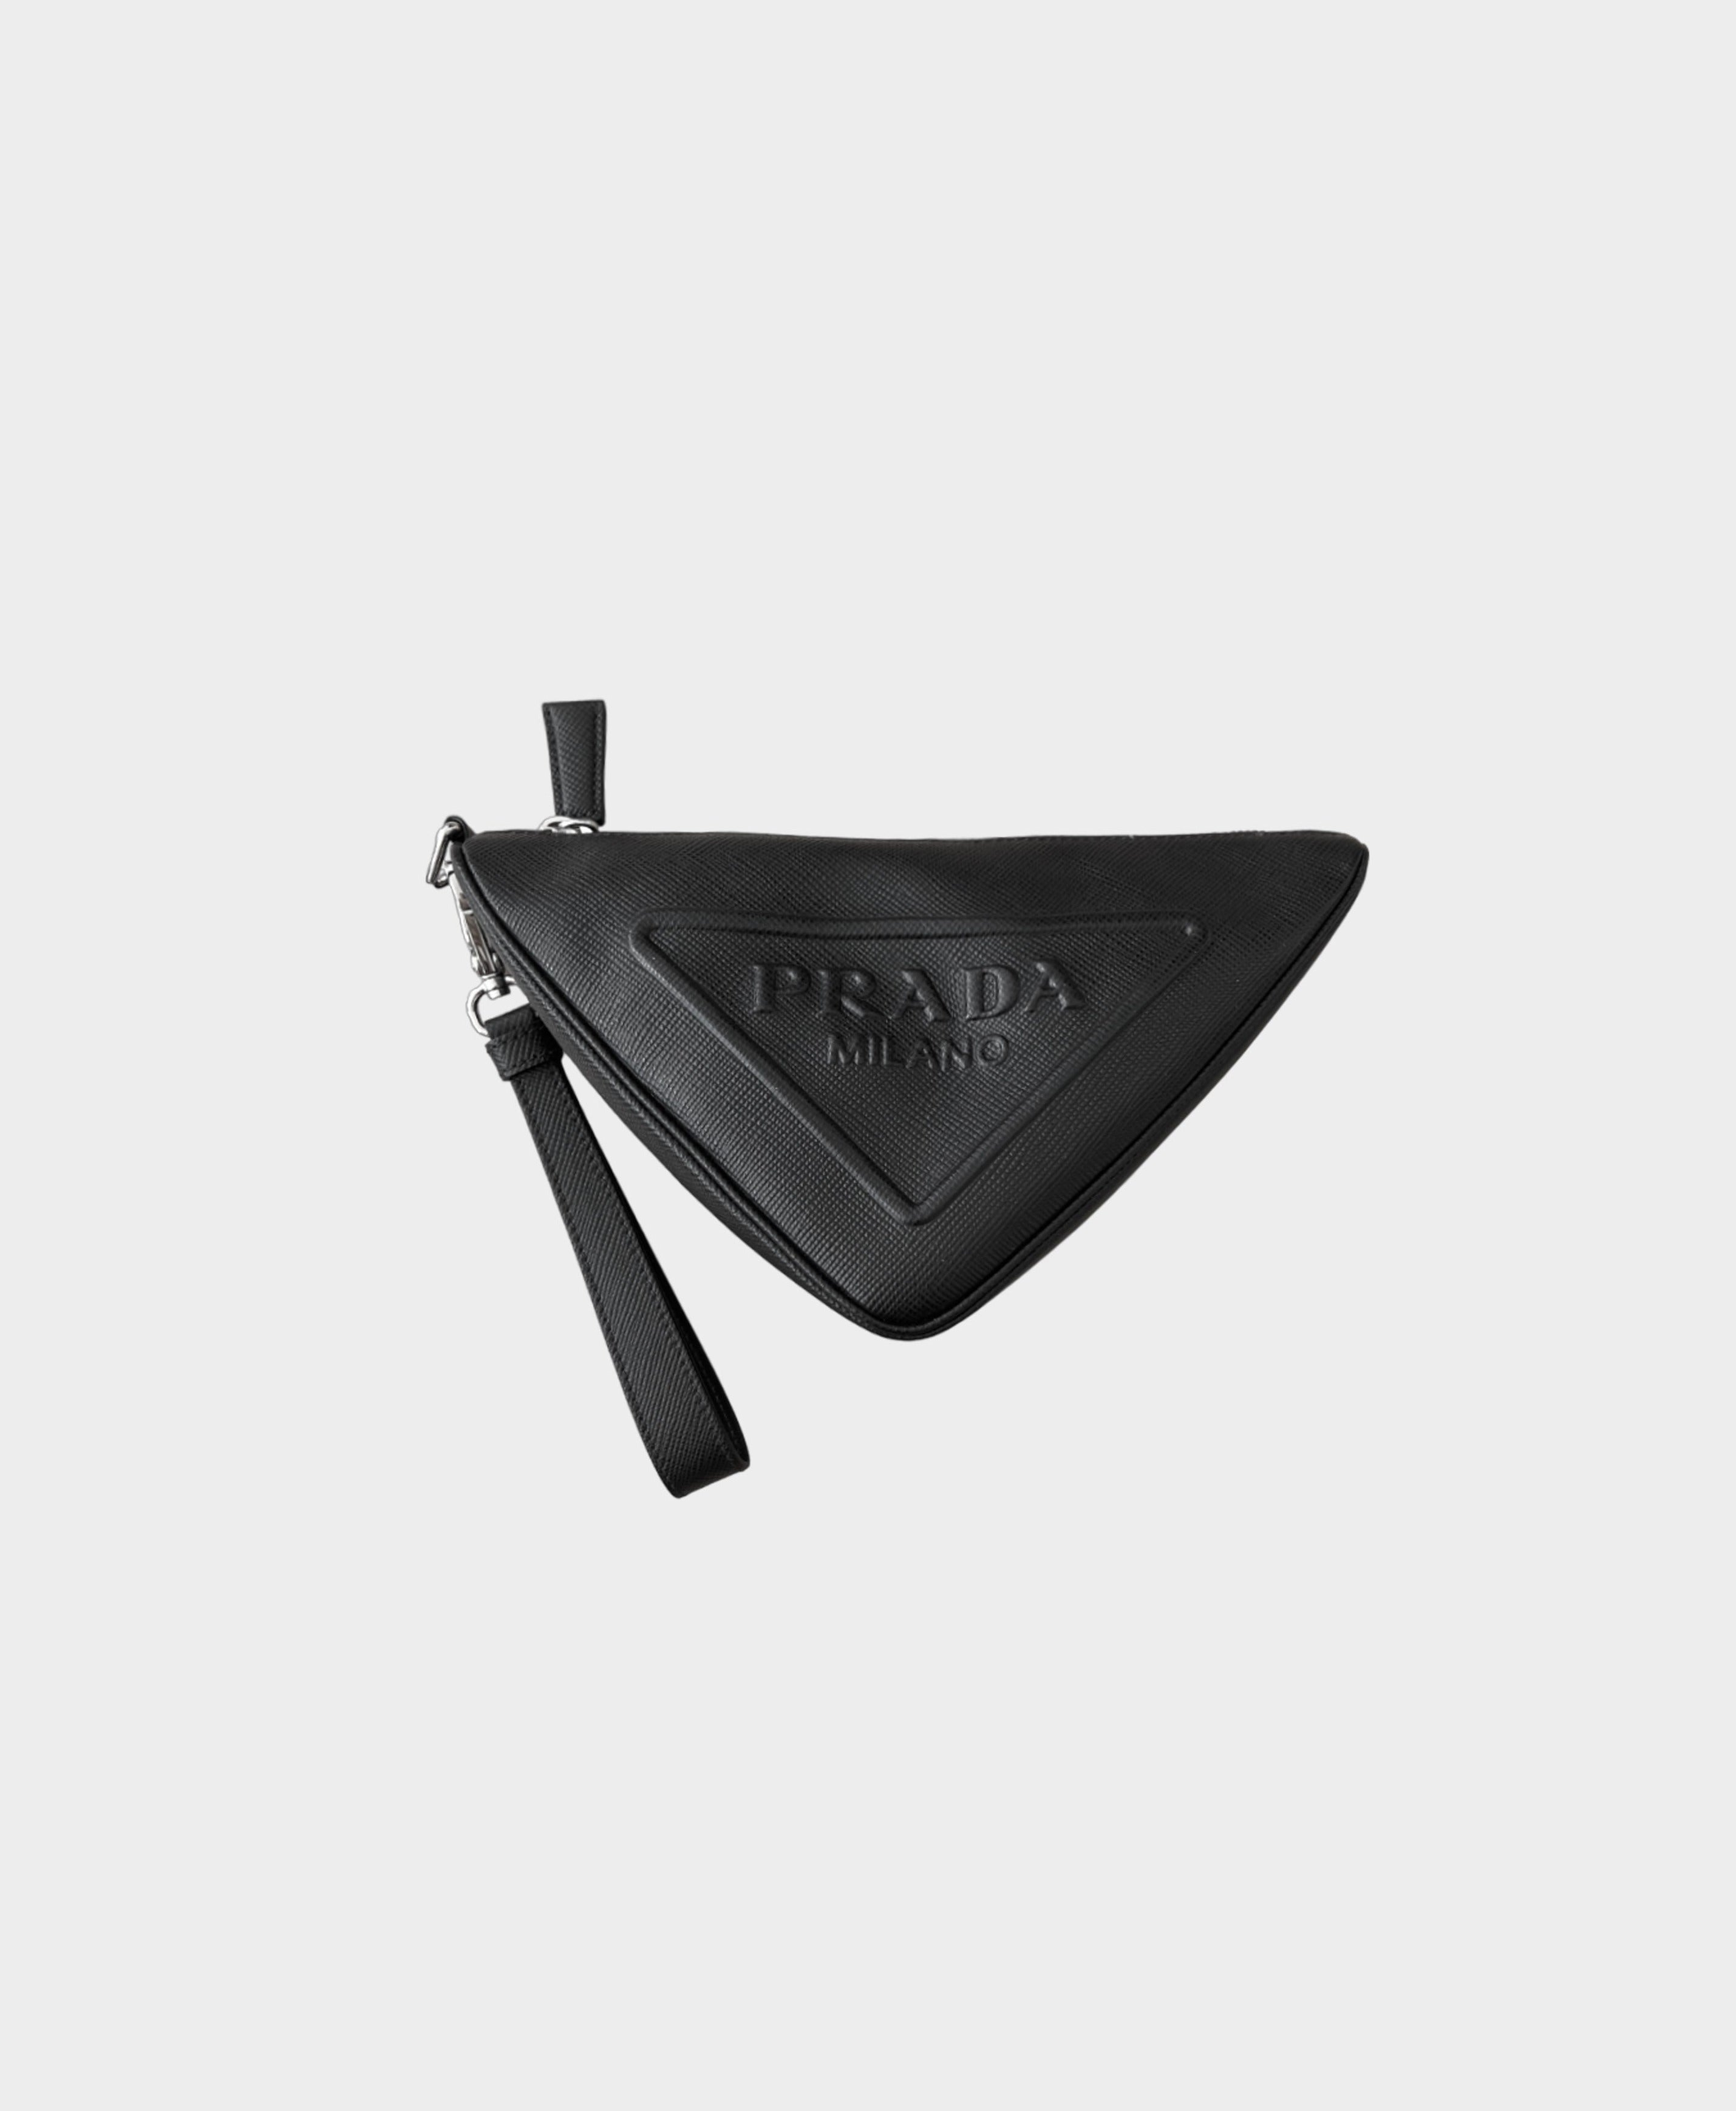 Prada 2020s Black Cross-Grain Leather Triangle Clutch Bag